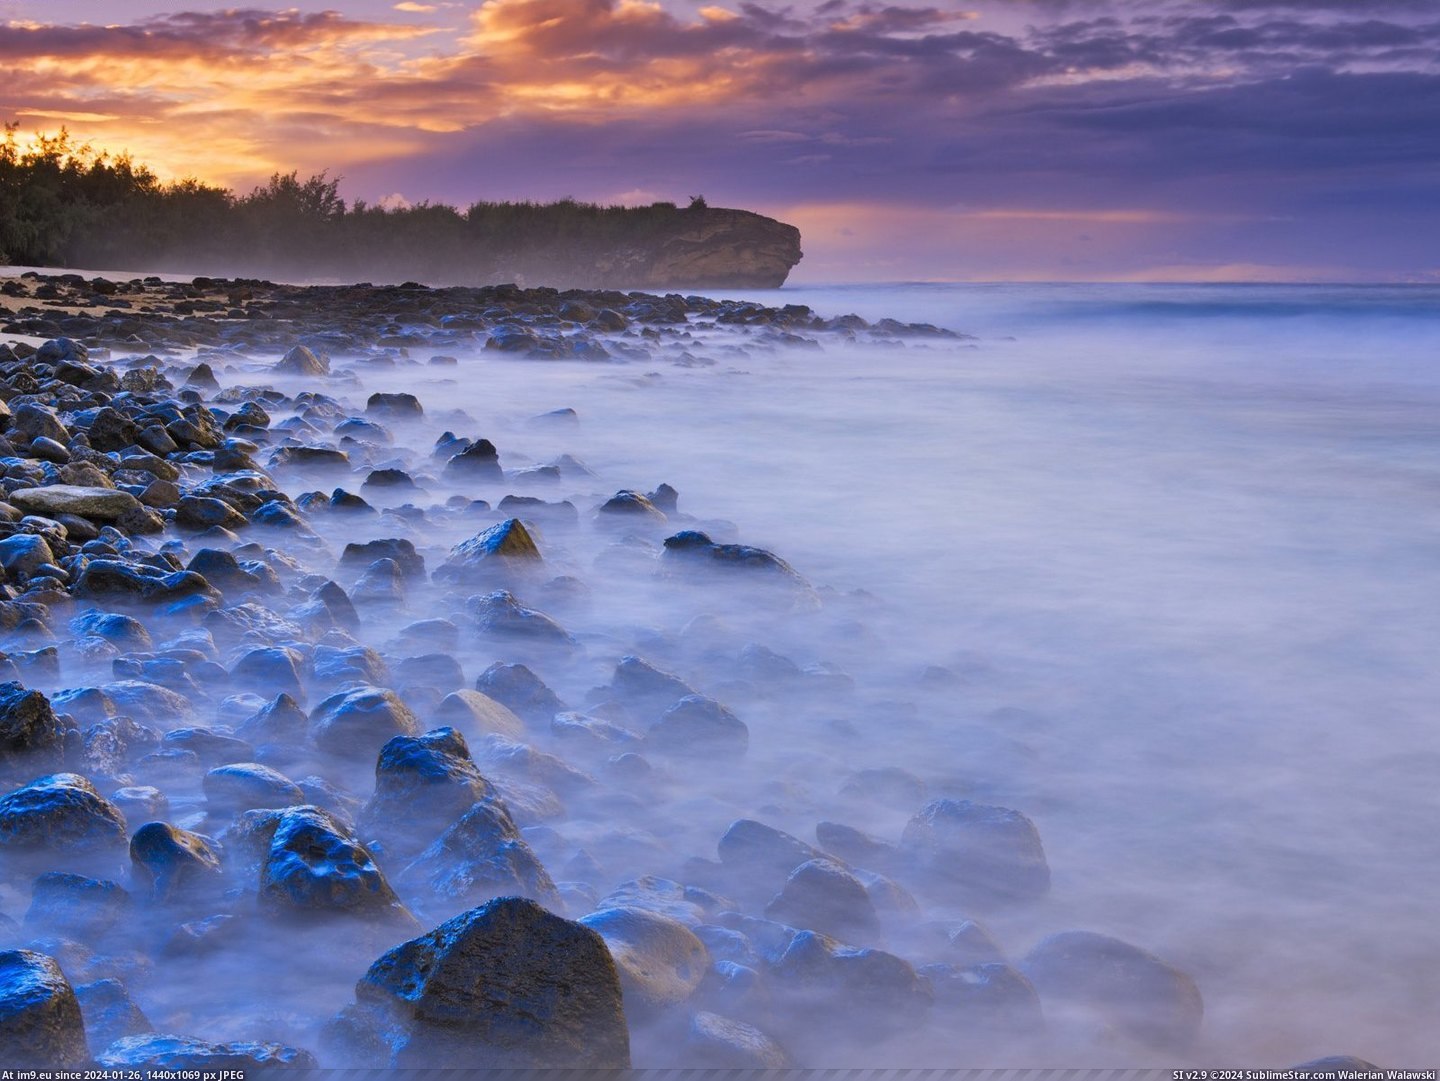 Shipwreck Beach, Kauai (in Beautiful photos and wallpapers)